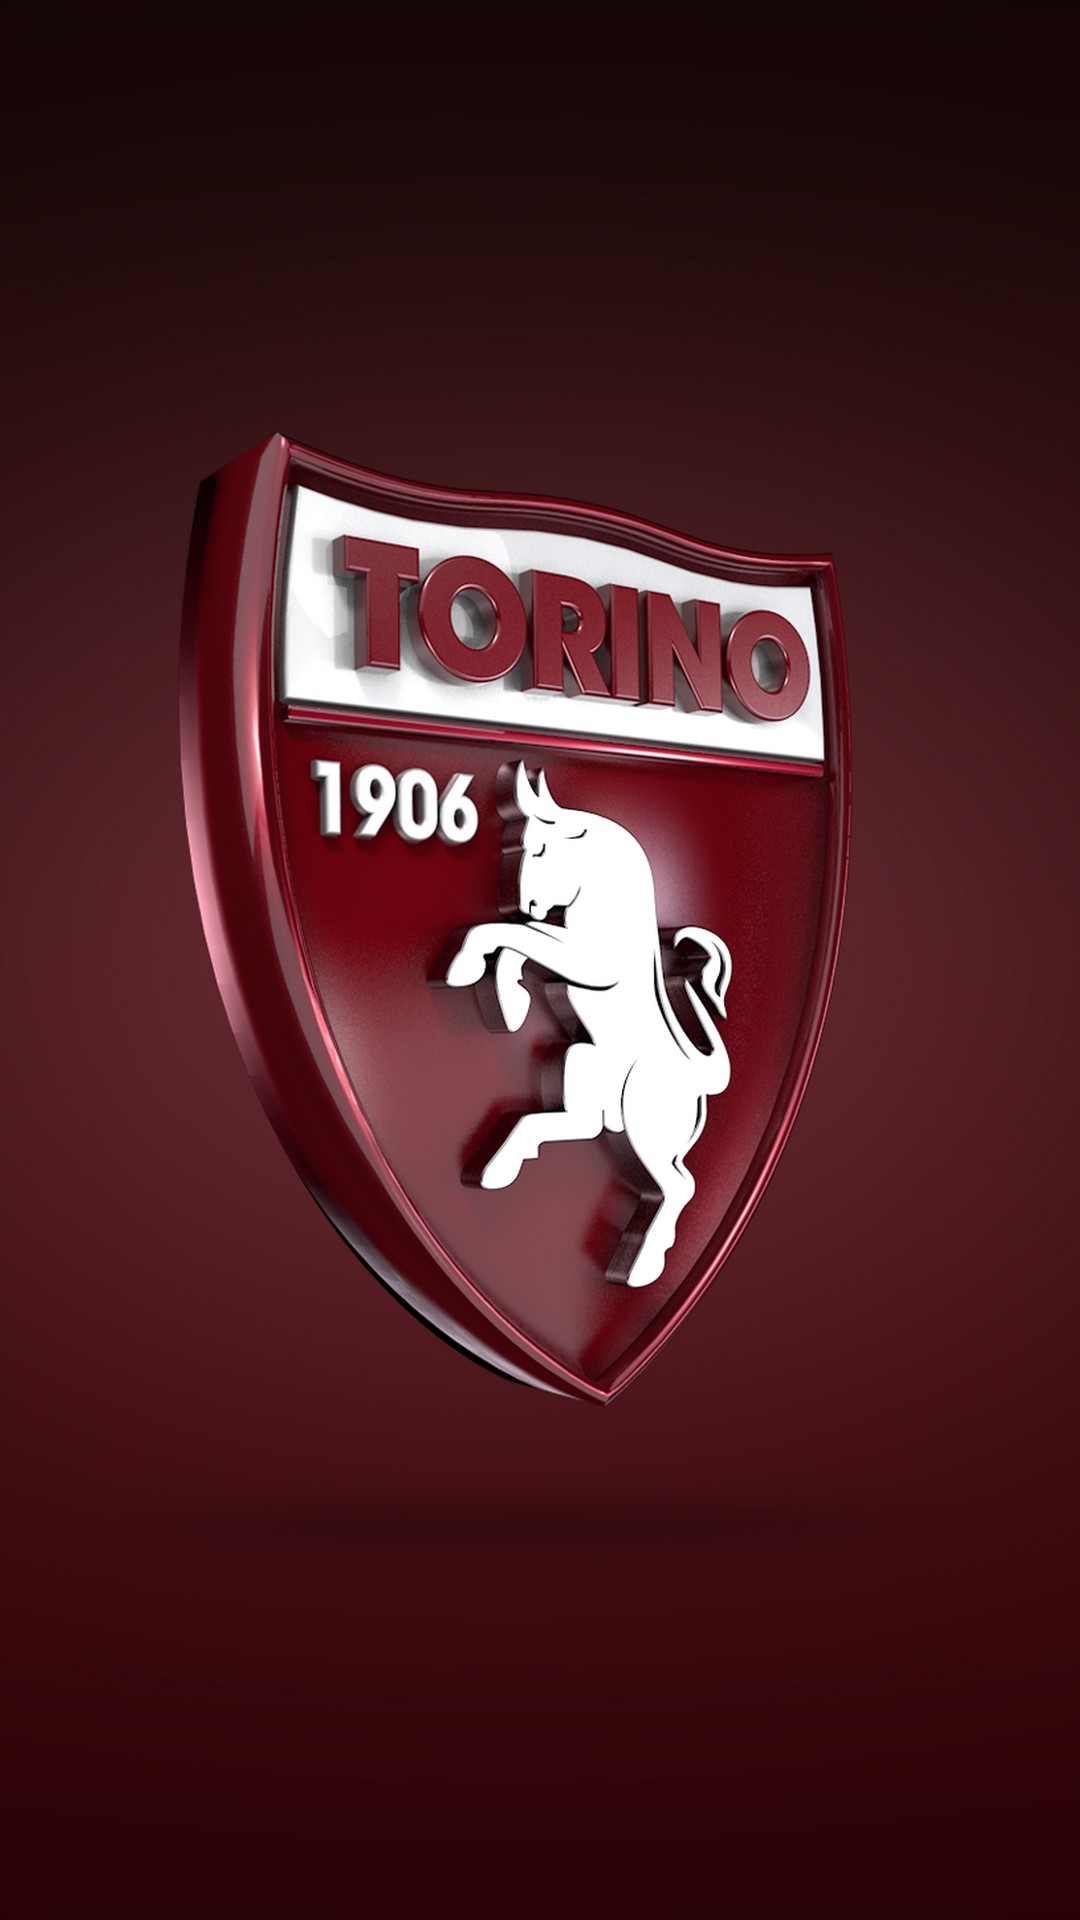 Torino Fc iPhone Wallpaper Football